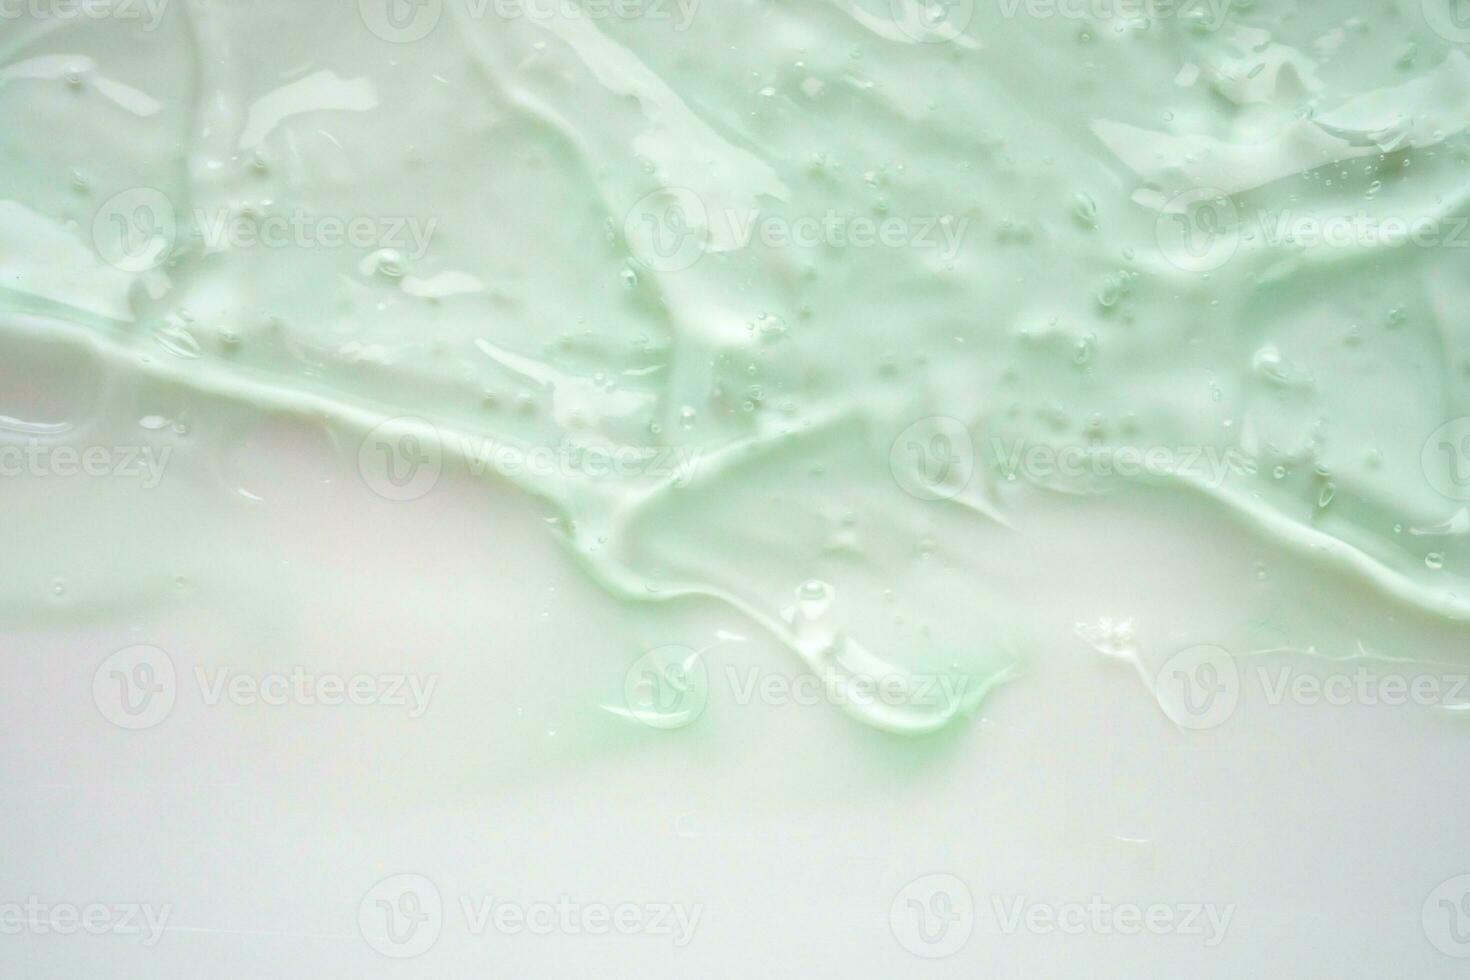 Transparent clear green liquid serum gel cosmetic texture background photo